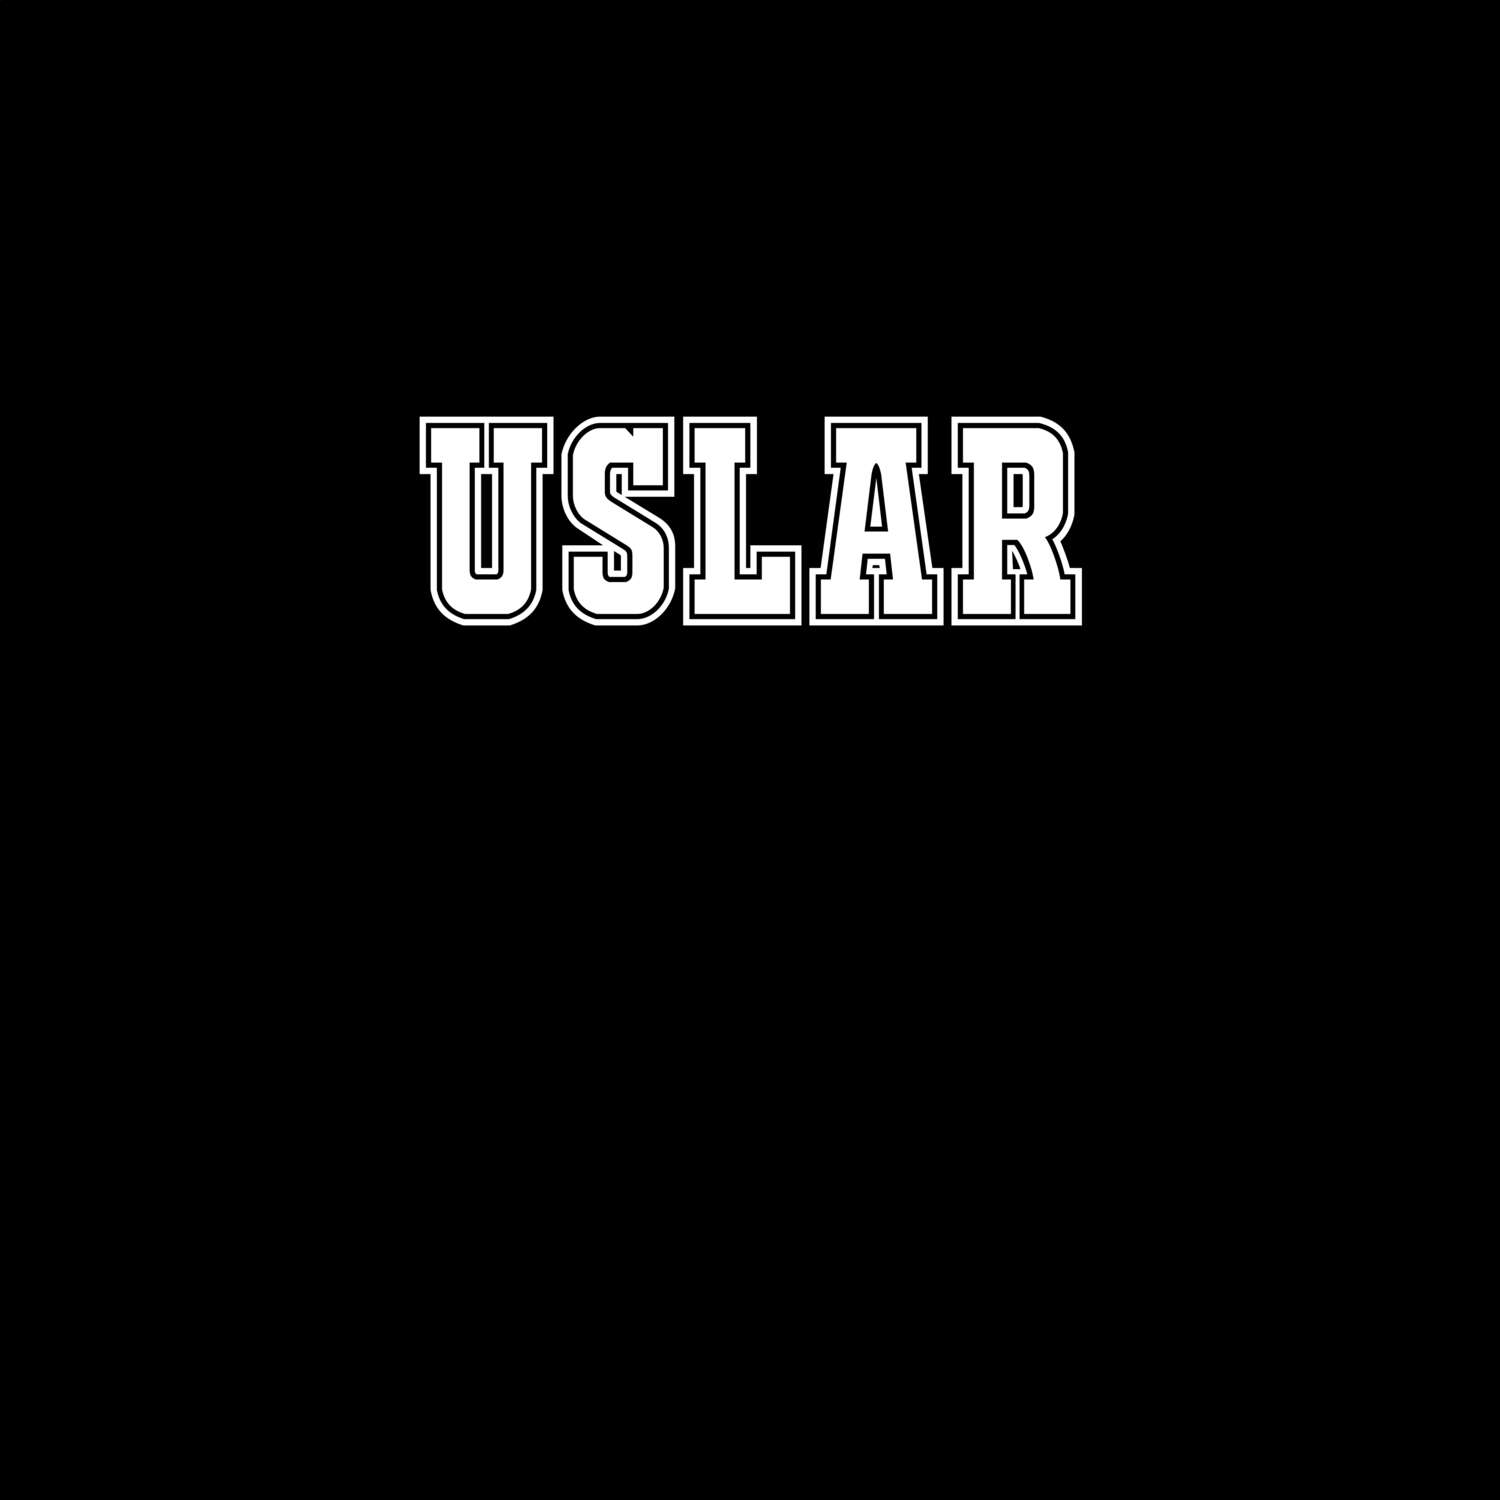 Uslar T-Shirt »Classic«